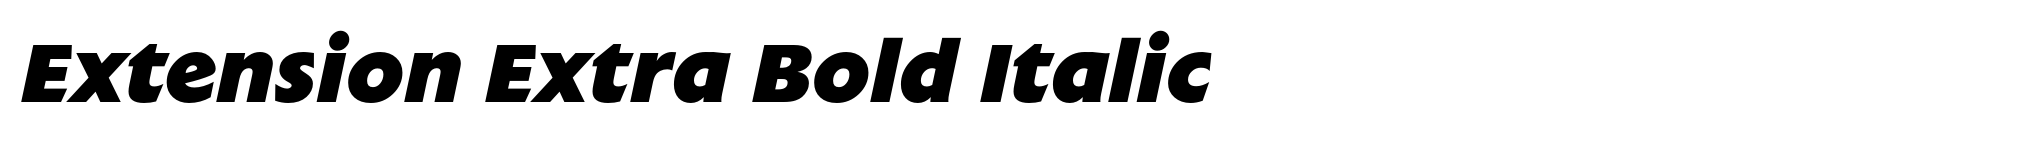 Extension Extra Bold Italic image